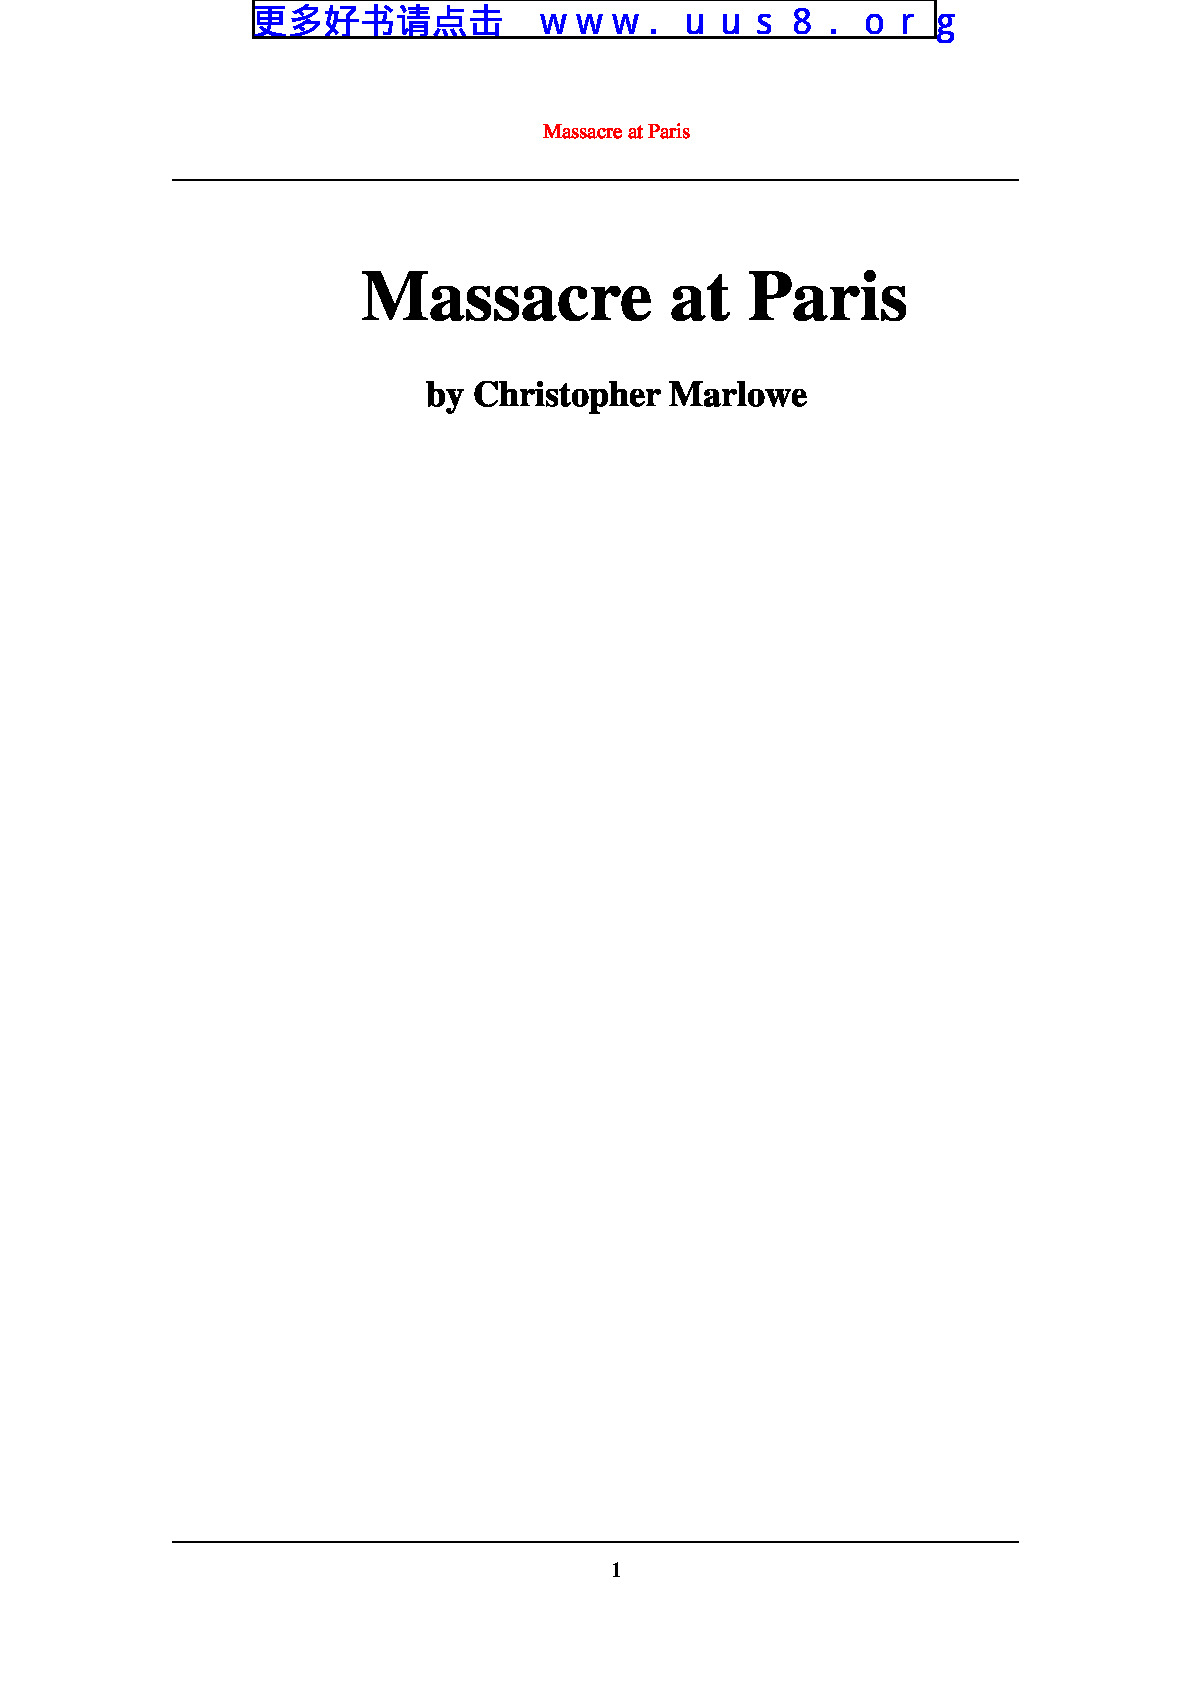 Massacre_at_Paris(巴黎大屠杀)